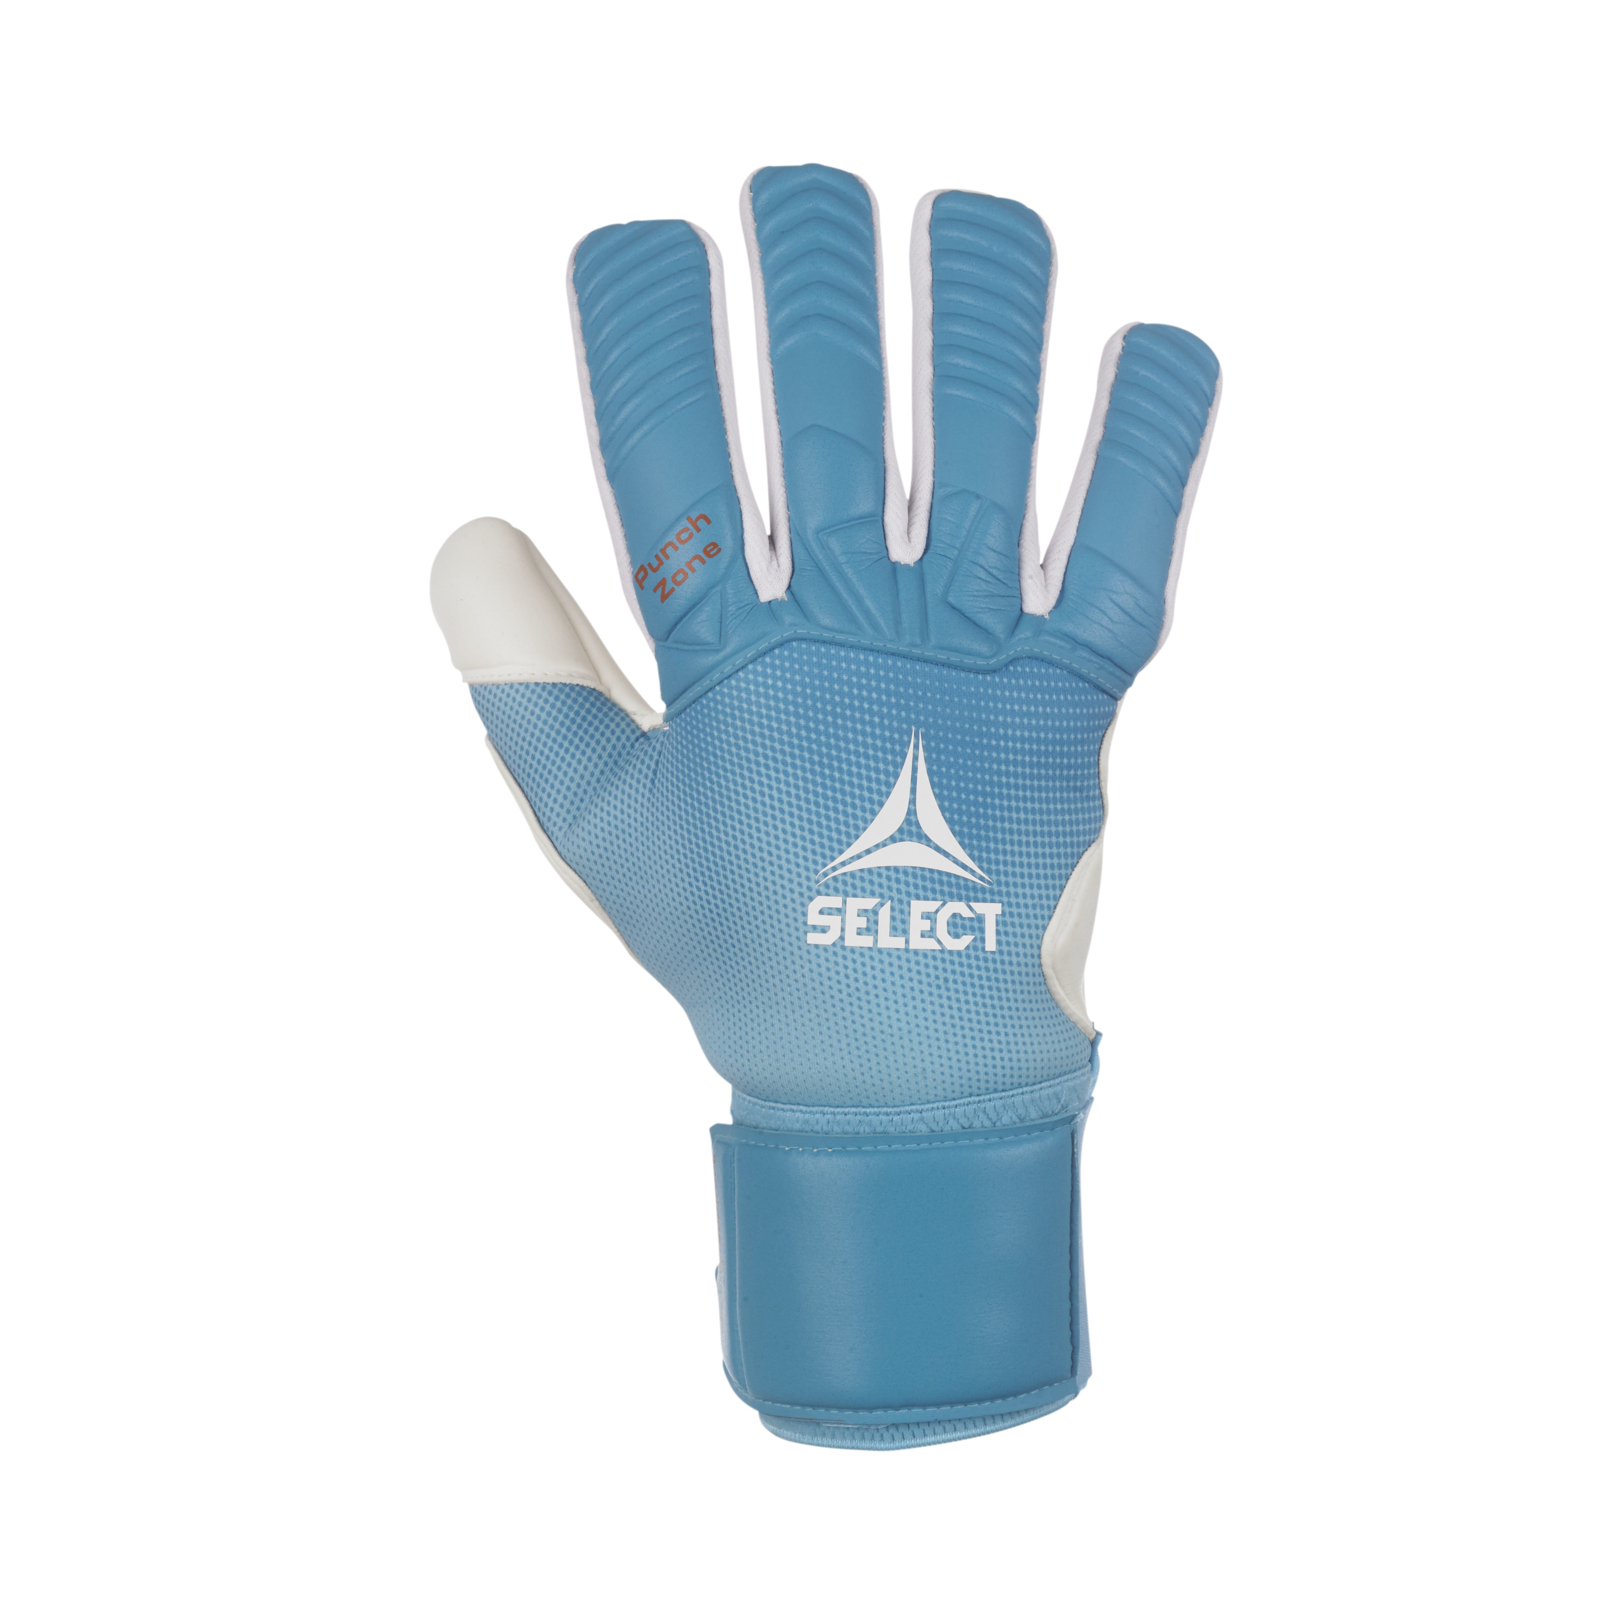 Вратарские перчатки Select Goalkeeper Gloves 33 601331-410 Allround синій, білий Уні 8 (5703543316410) изображение 3